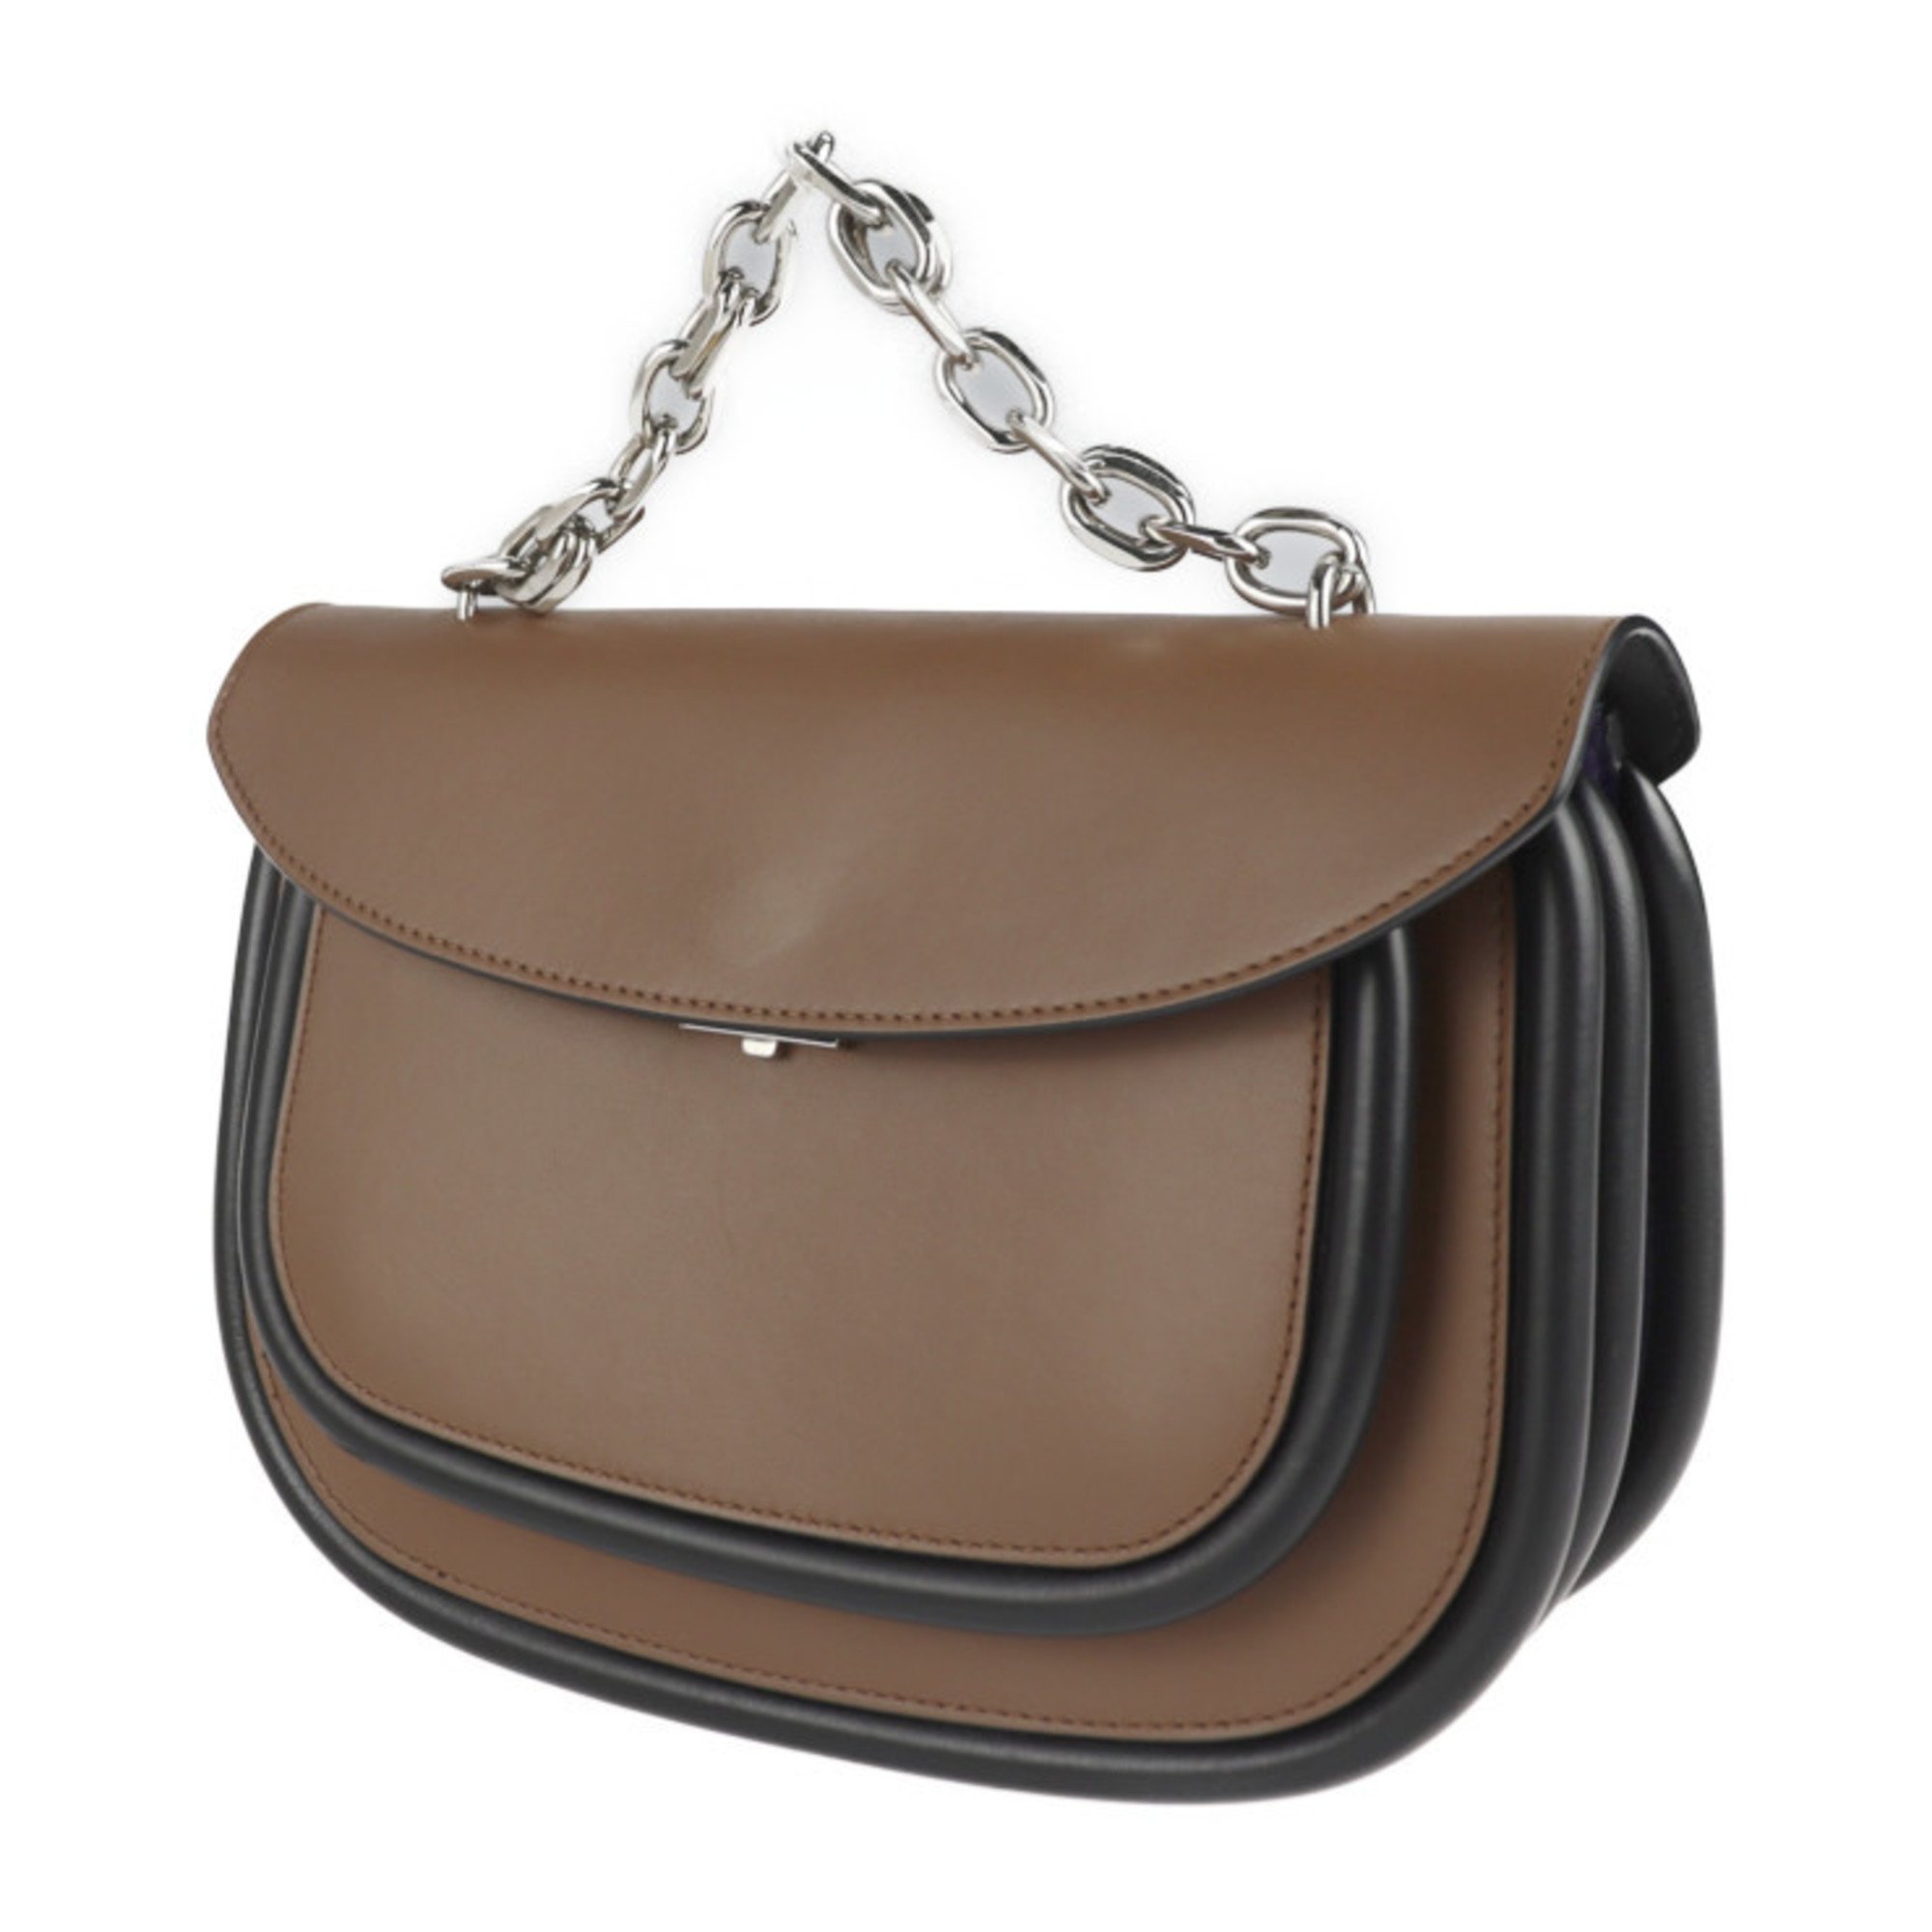 MARNI Maruni shoulder bag SBMPZ12Q01 leather brown black 2WAY 3WAY handbag messenger shopping tote chain